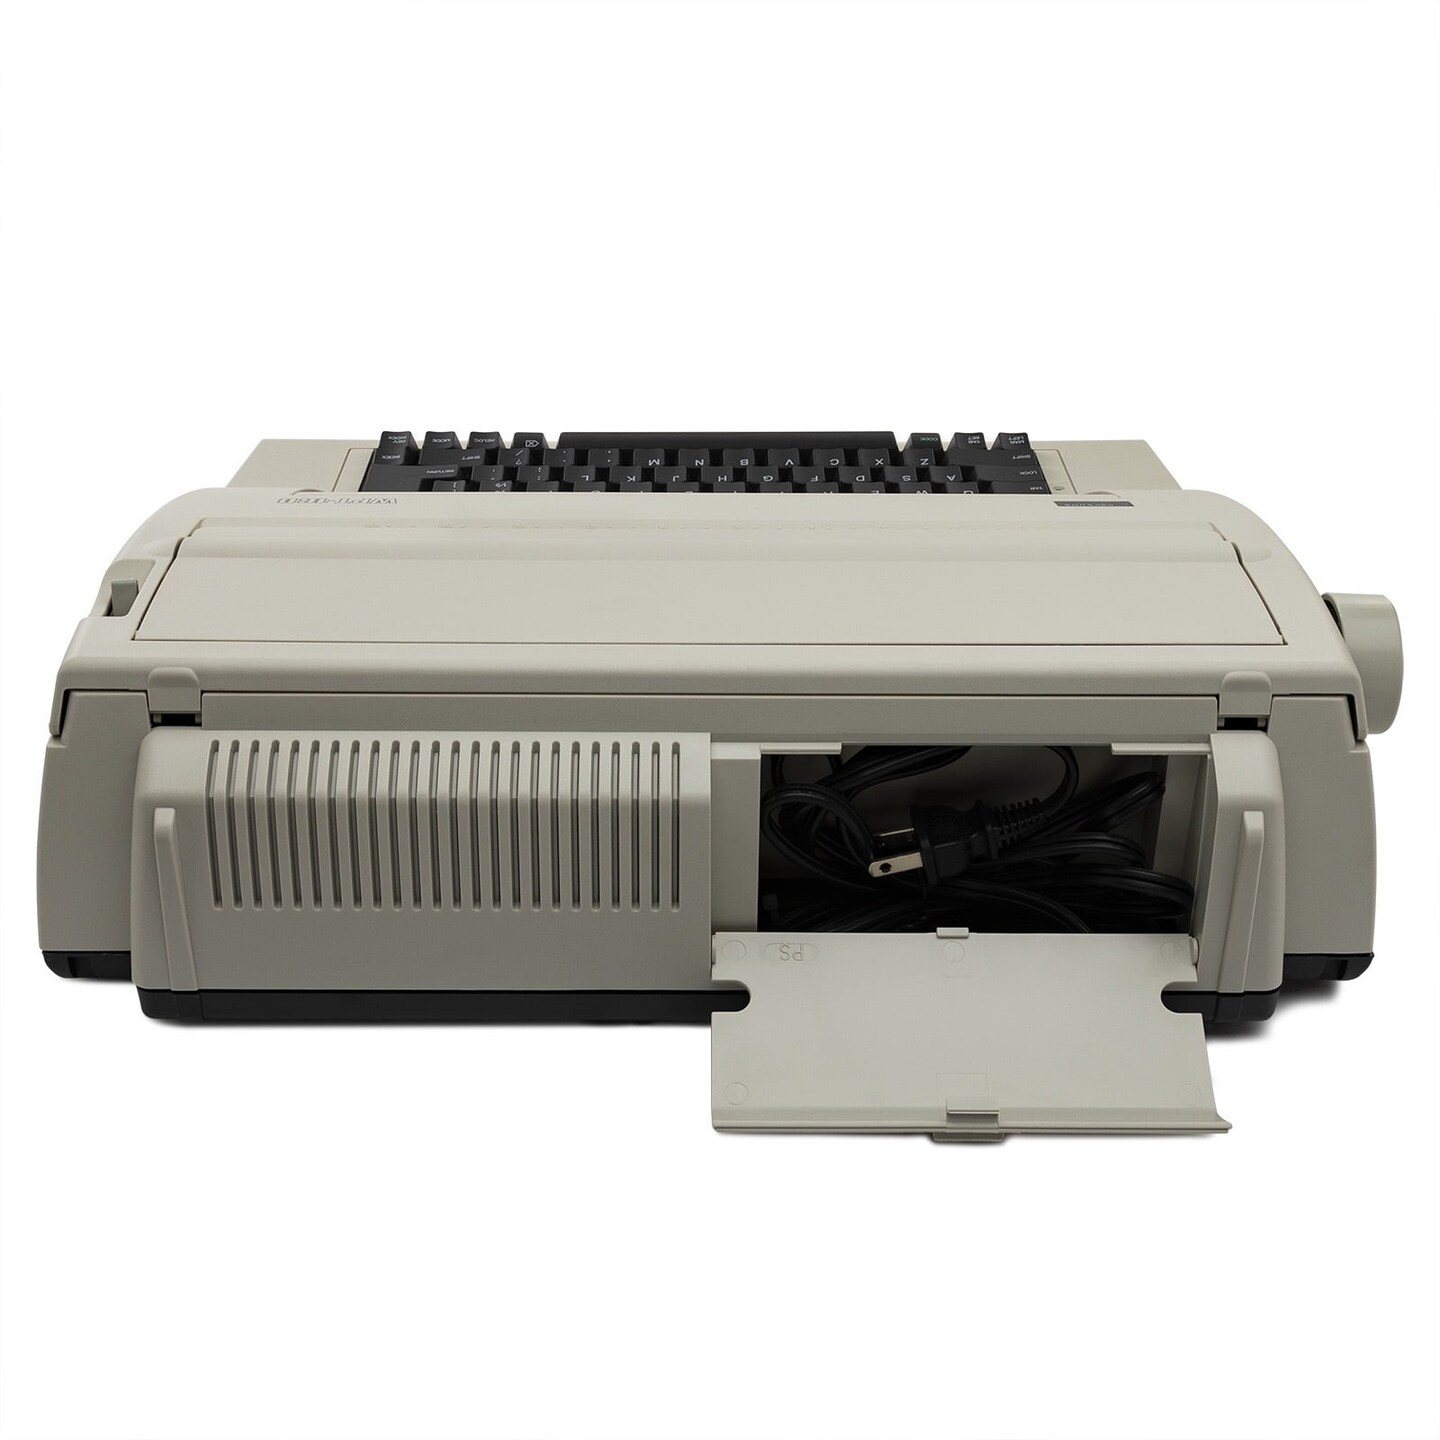 Nakajima WPT-160: Electronic Typewriter with Display and Memory